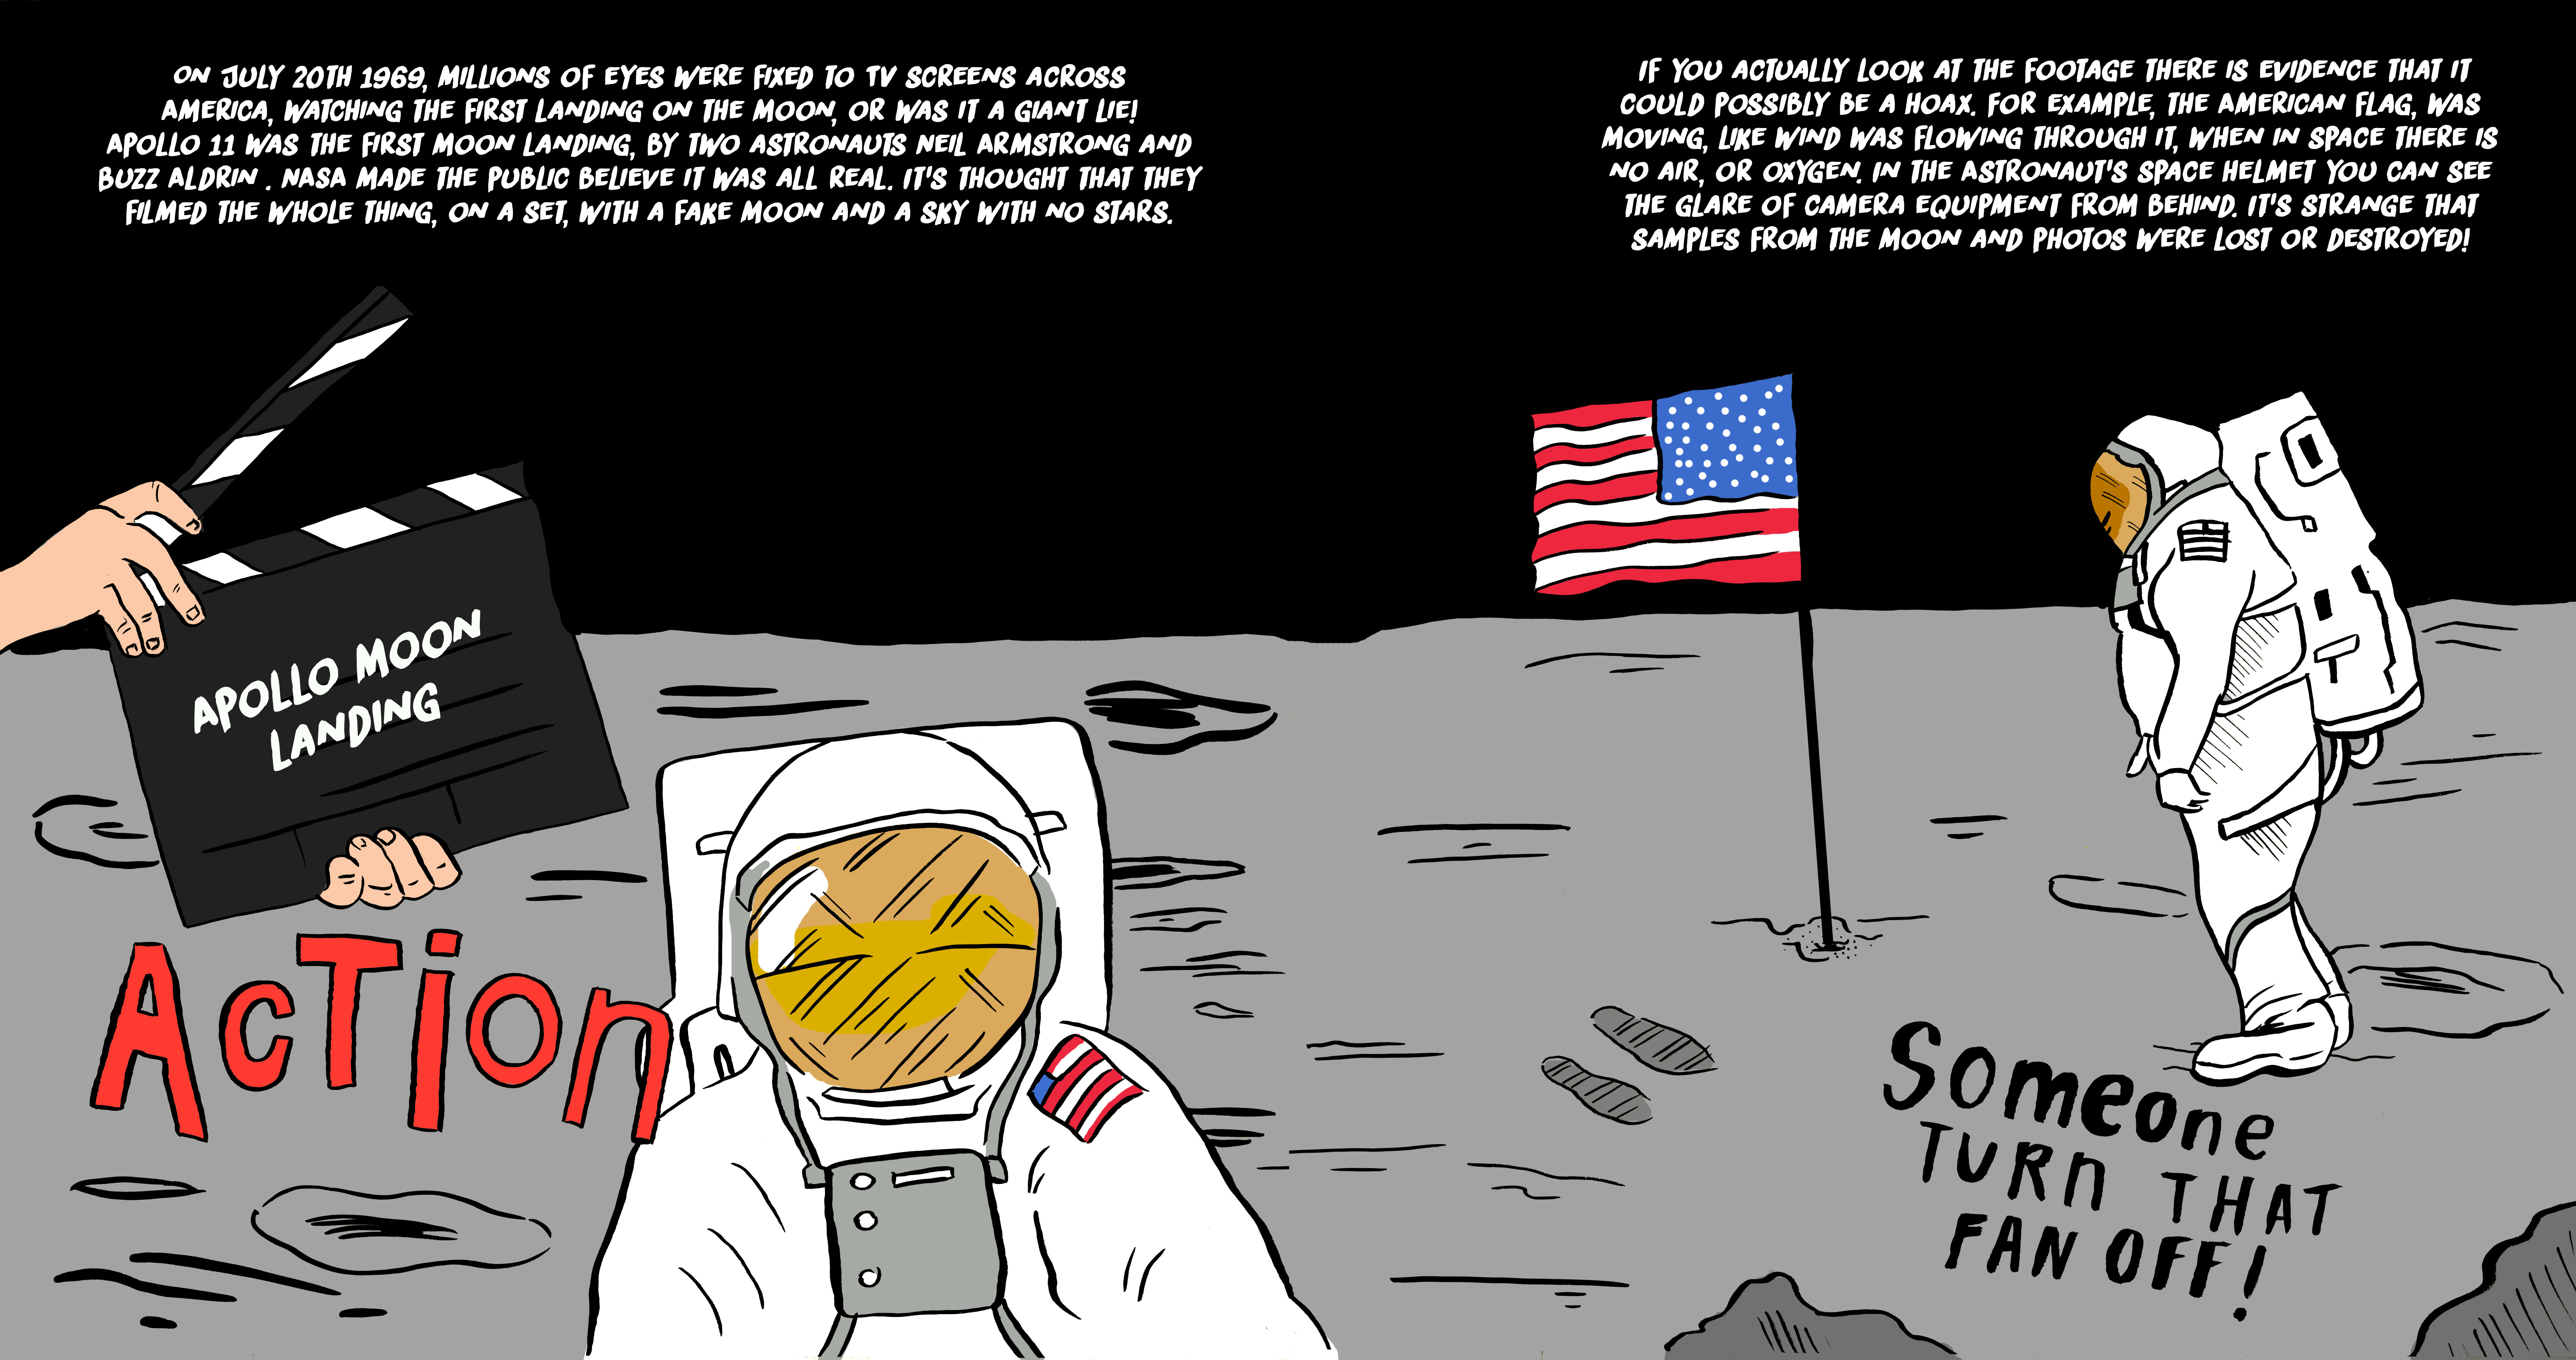 Apollo moon landing -Recovered